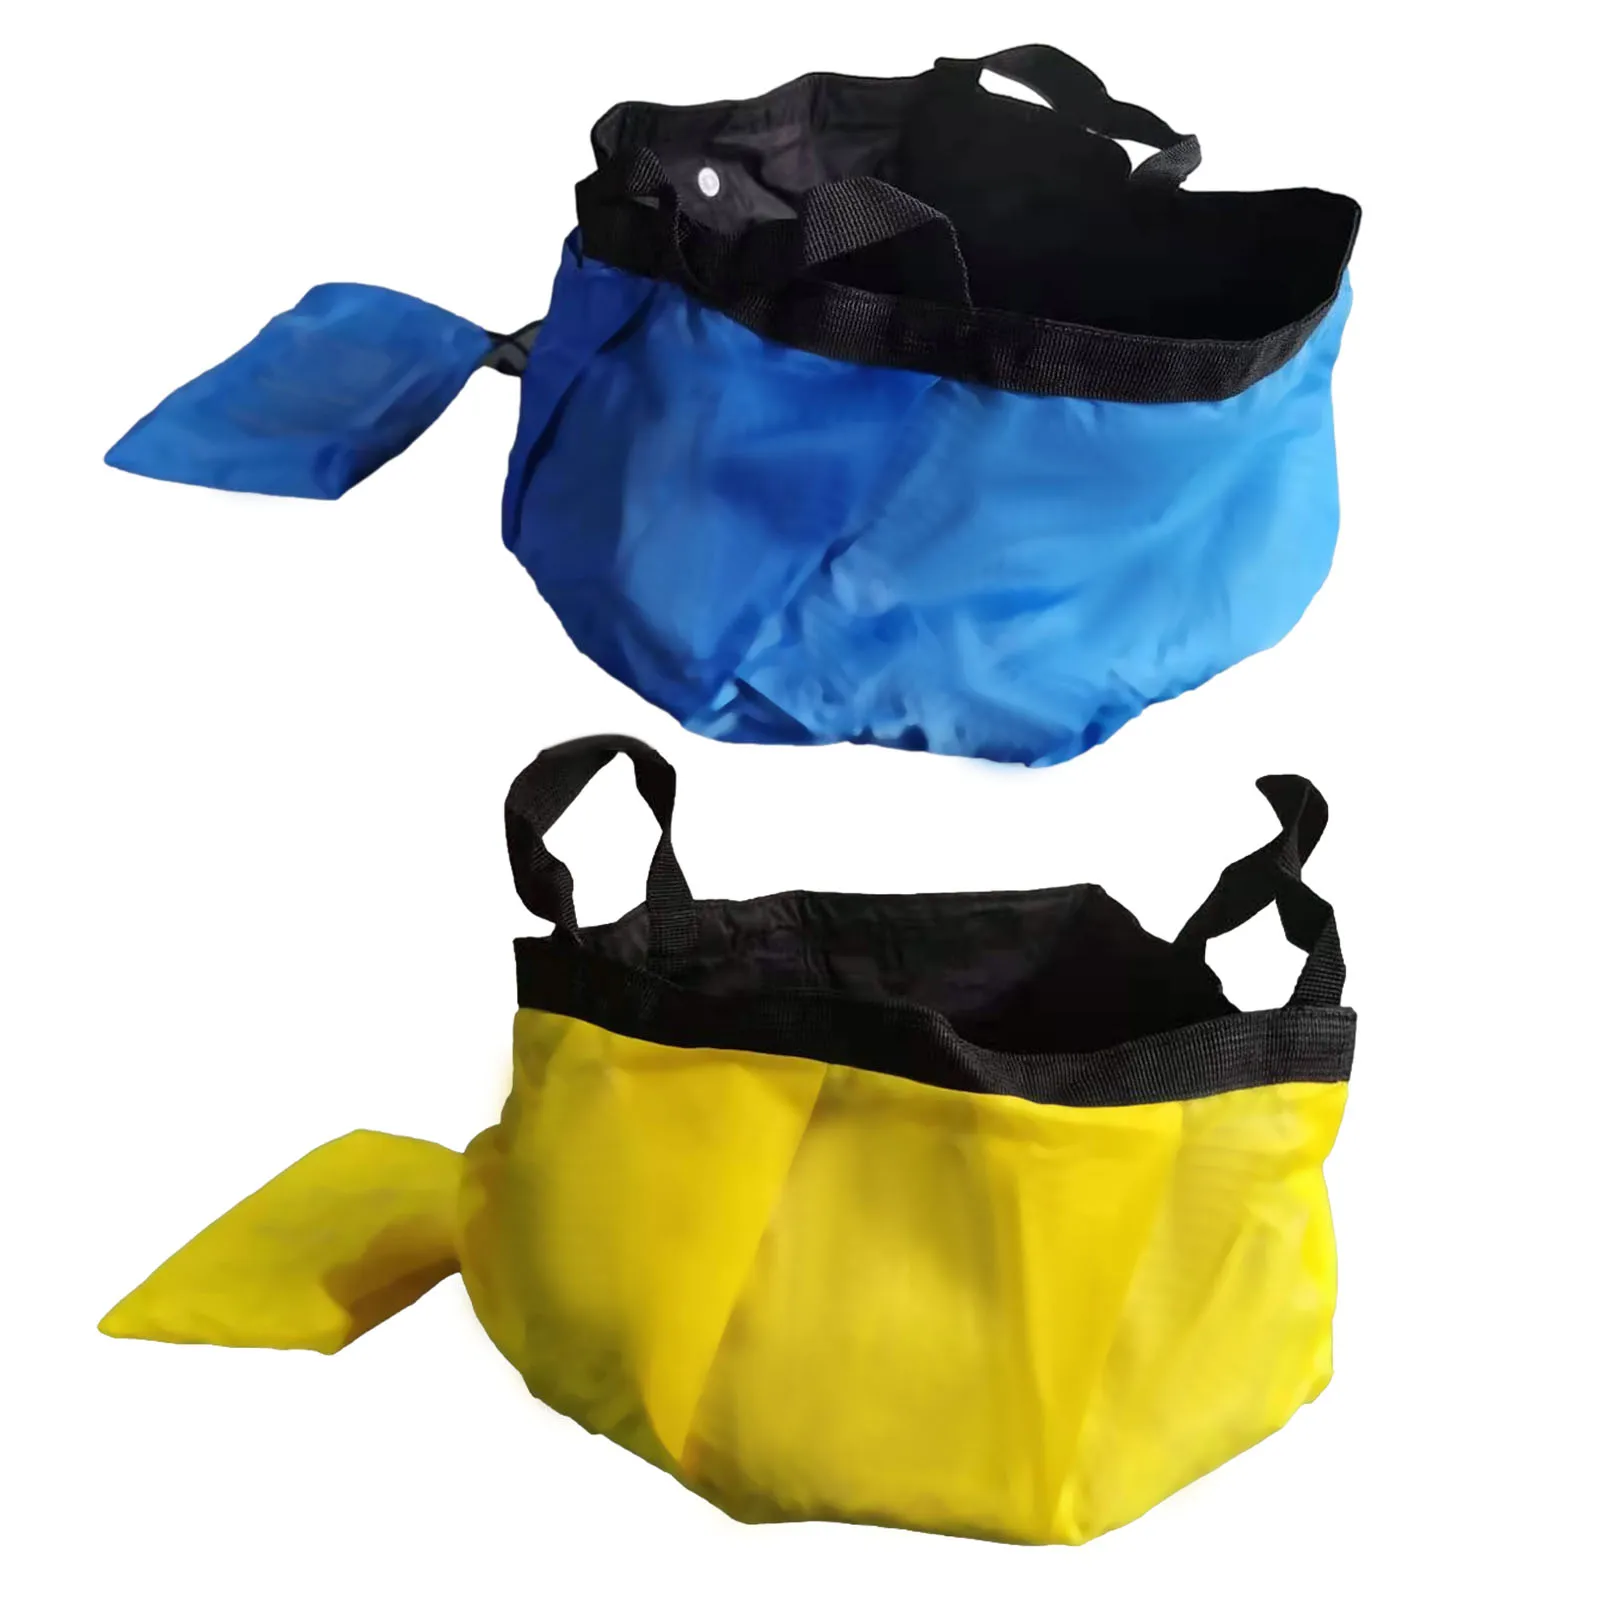 12L Outdoor Camping Foldable Folding Water Bag Sink Washbasin Travel Wash Basin